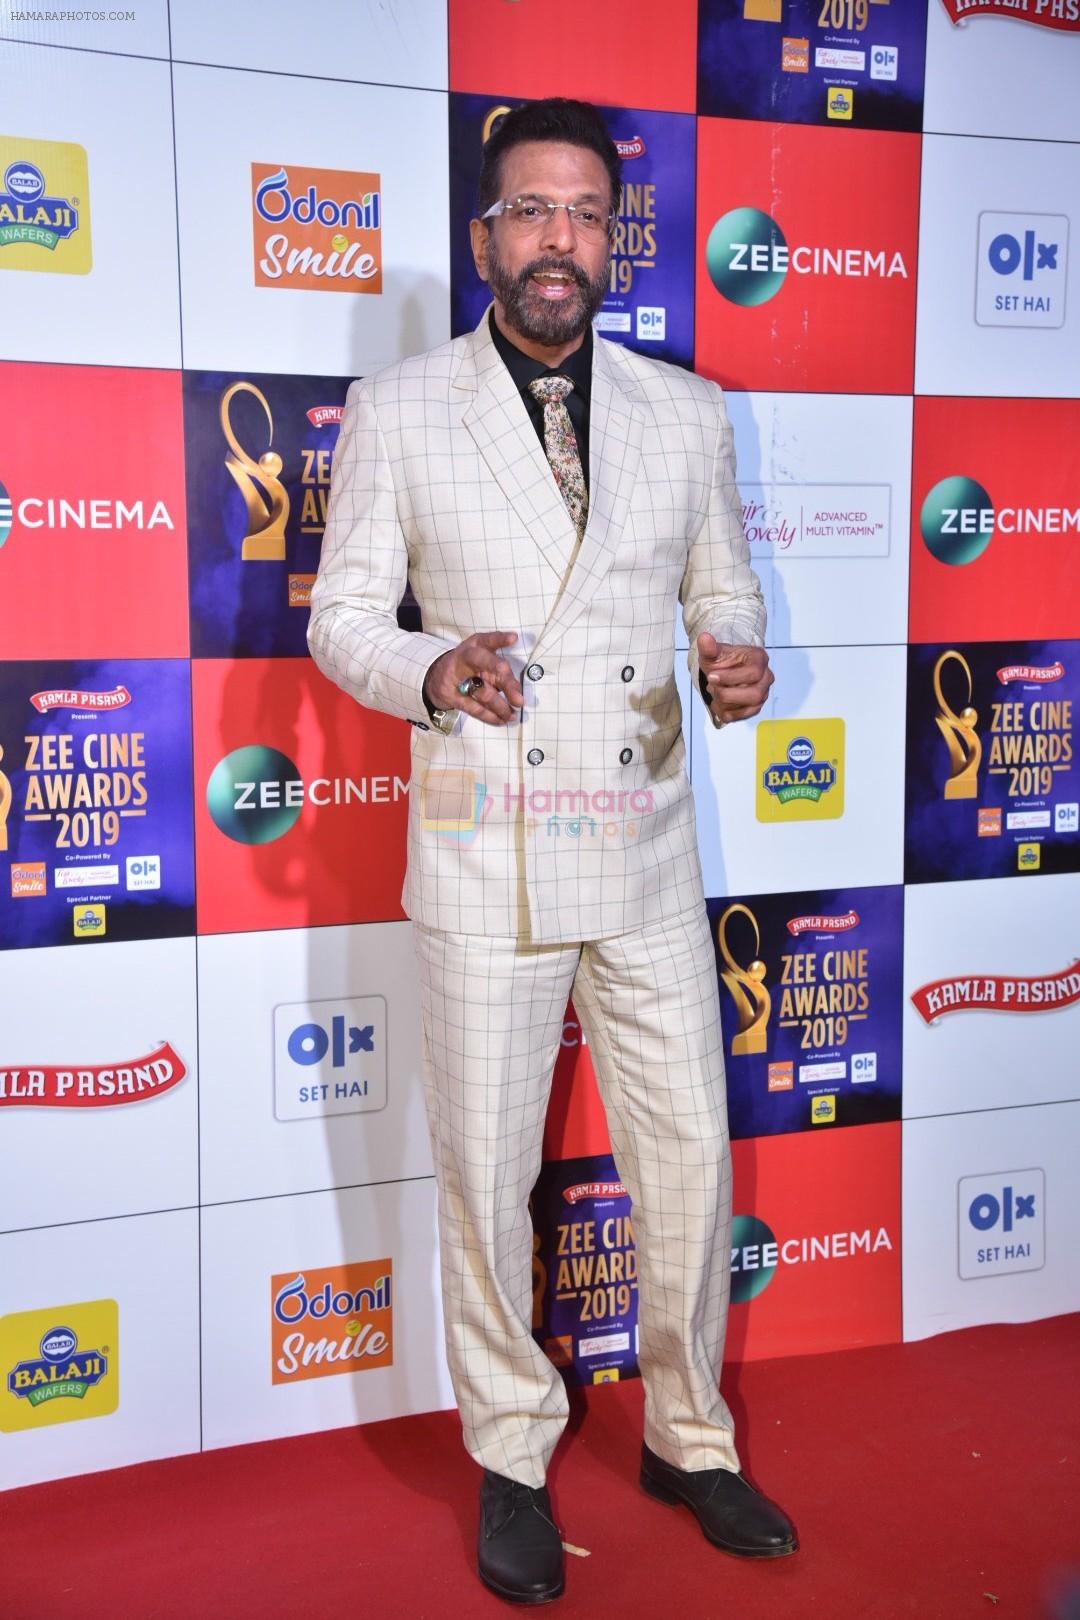 Javed Jaffrey at Zee cine awards red carpet on 19th March 2019